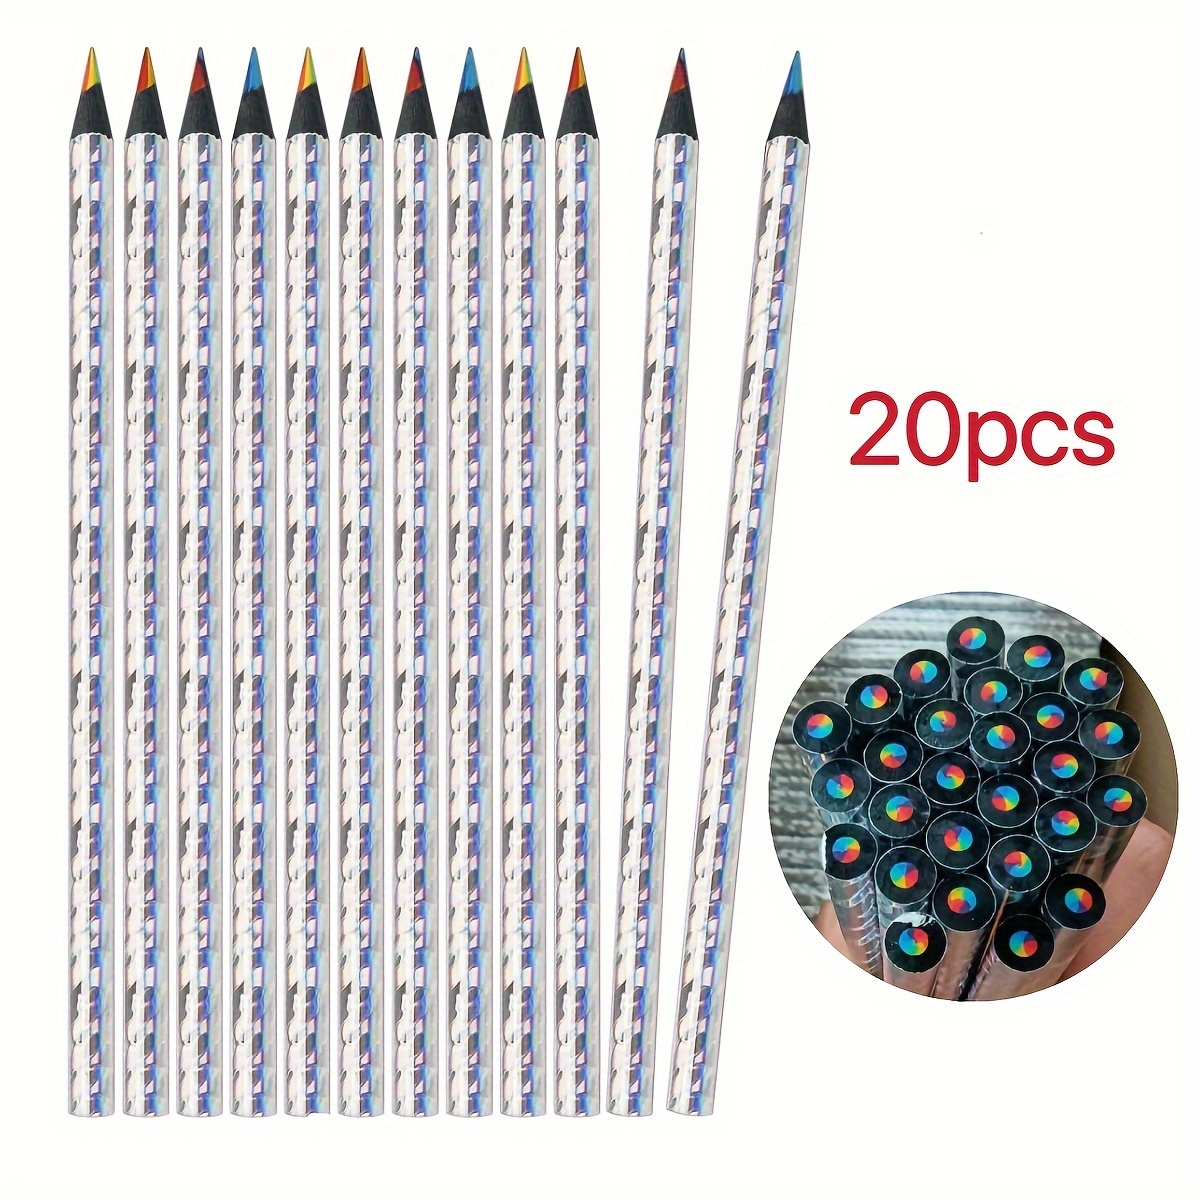 20PCS 7 in 1 Rainbow Pencil Set, Fun Rainbow Colored Pencils for